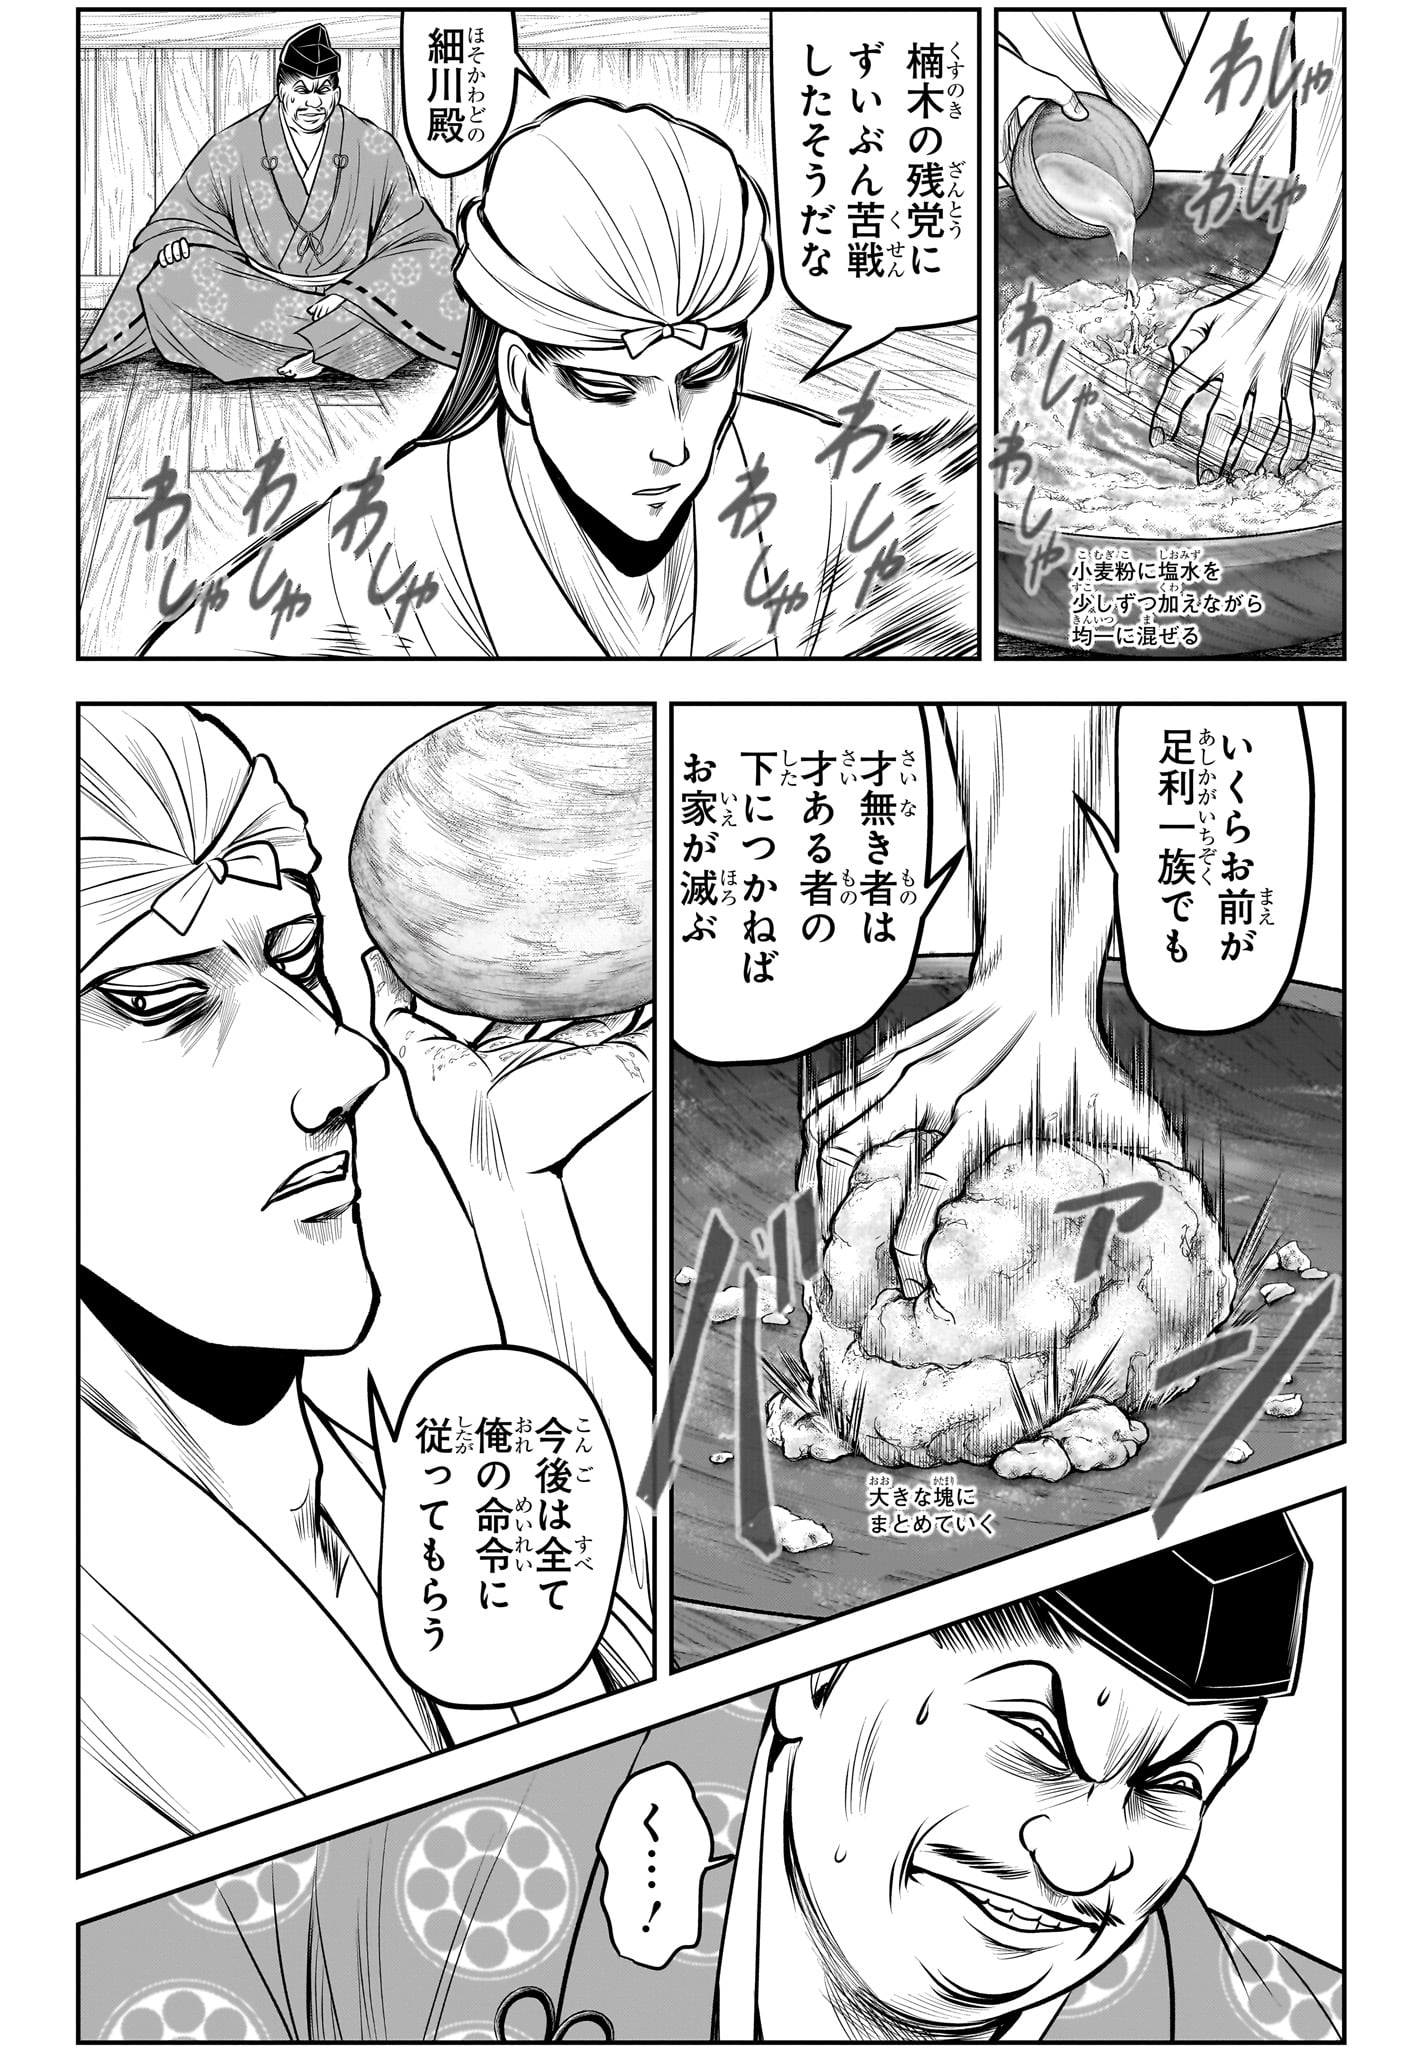 Nige Jouzu no Wakagimi - Chapter 150 - Page 2